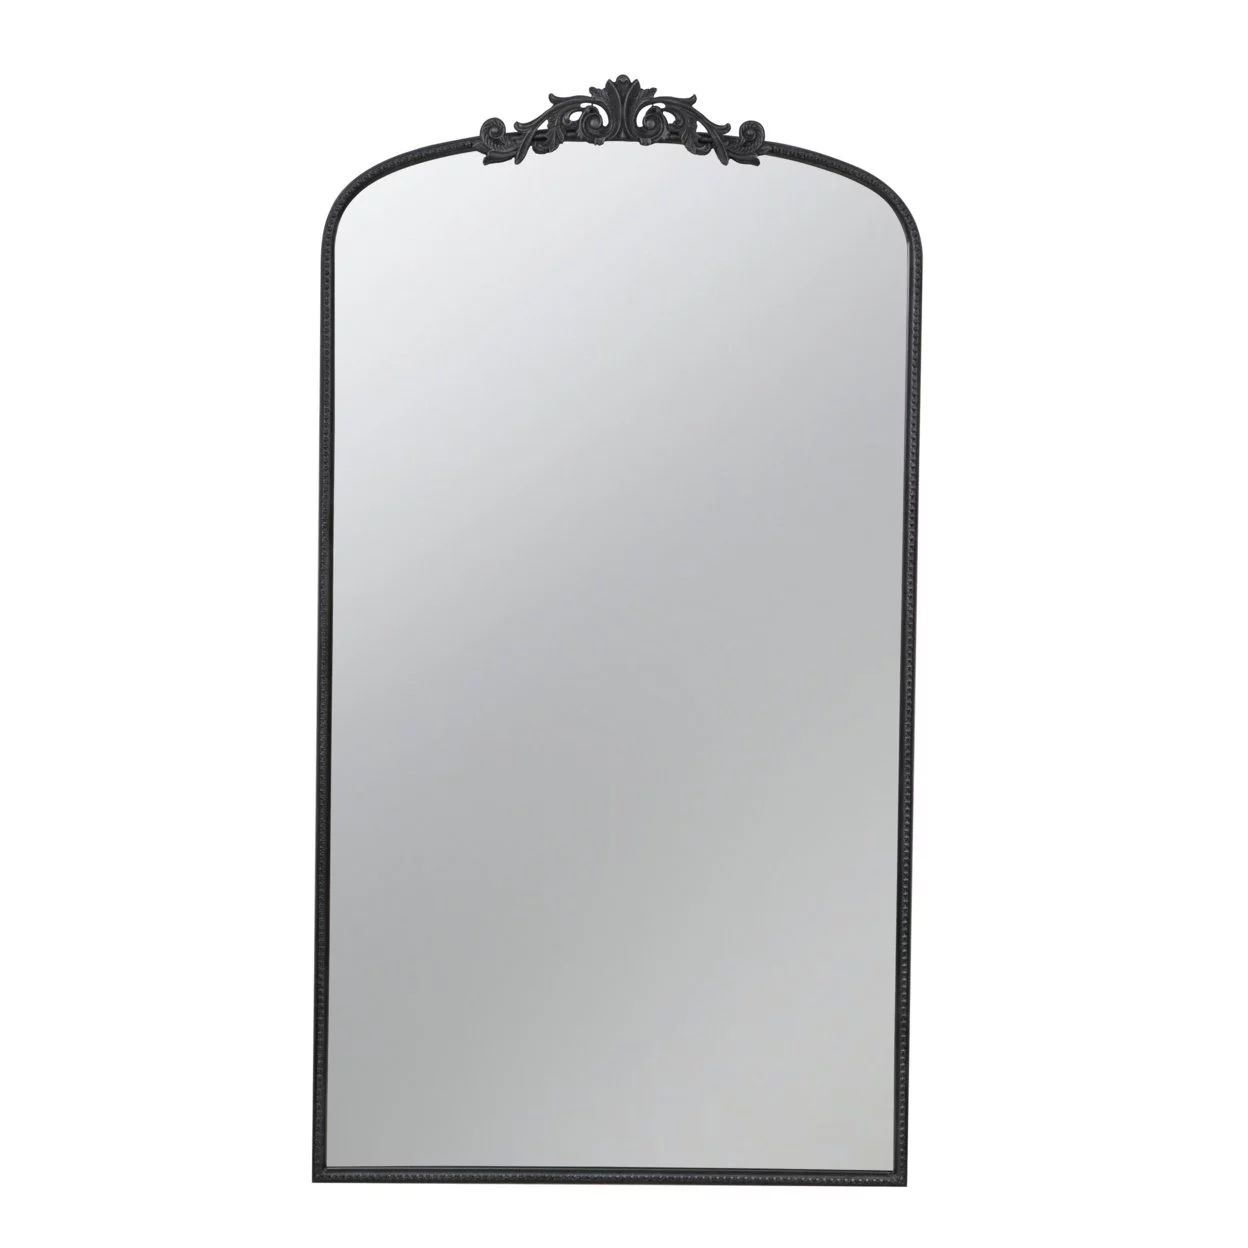 Kea 66 Inch Wall Mirror, Black Curved Metal Frame, Ornate Baroque Design- Saltoro Sherpi | Walmart (US)